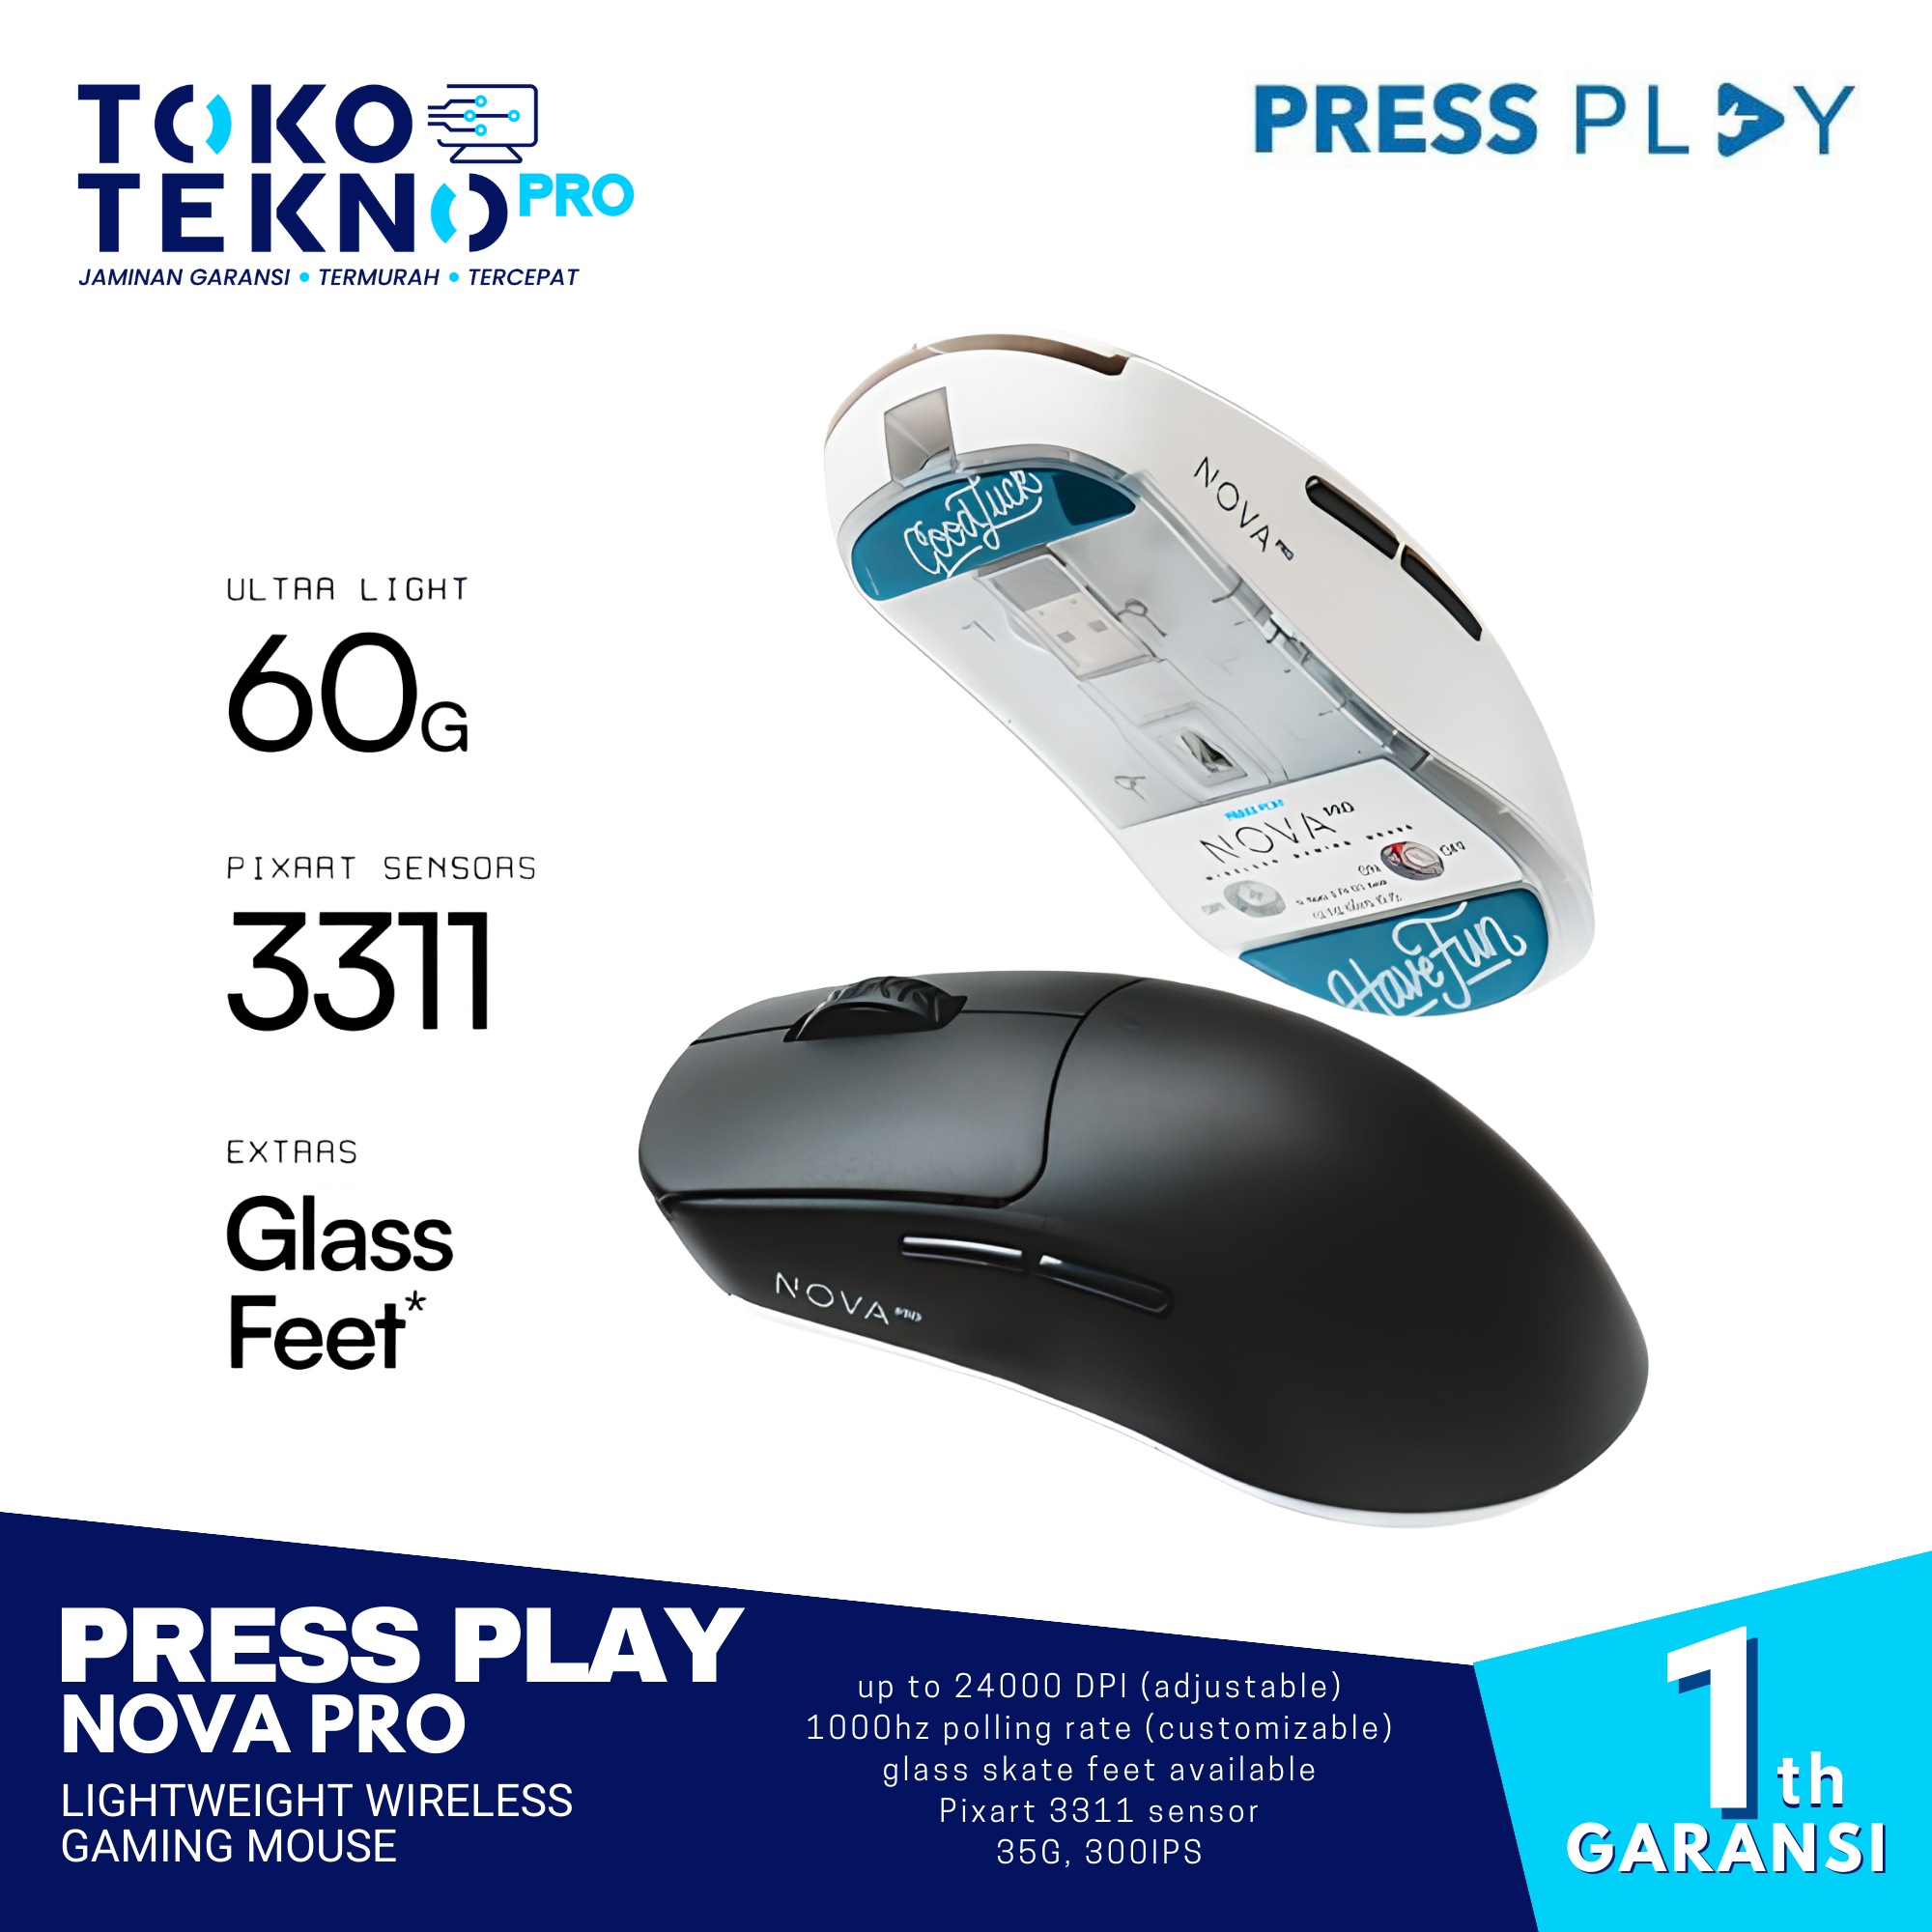 Press Play Nova Pro Lightweight Wireless Gaming Mouse